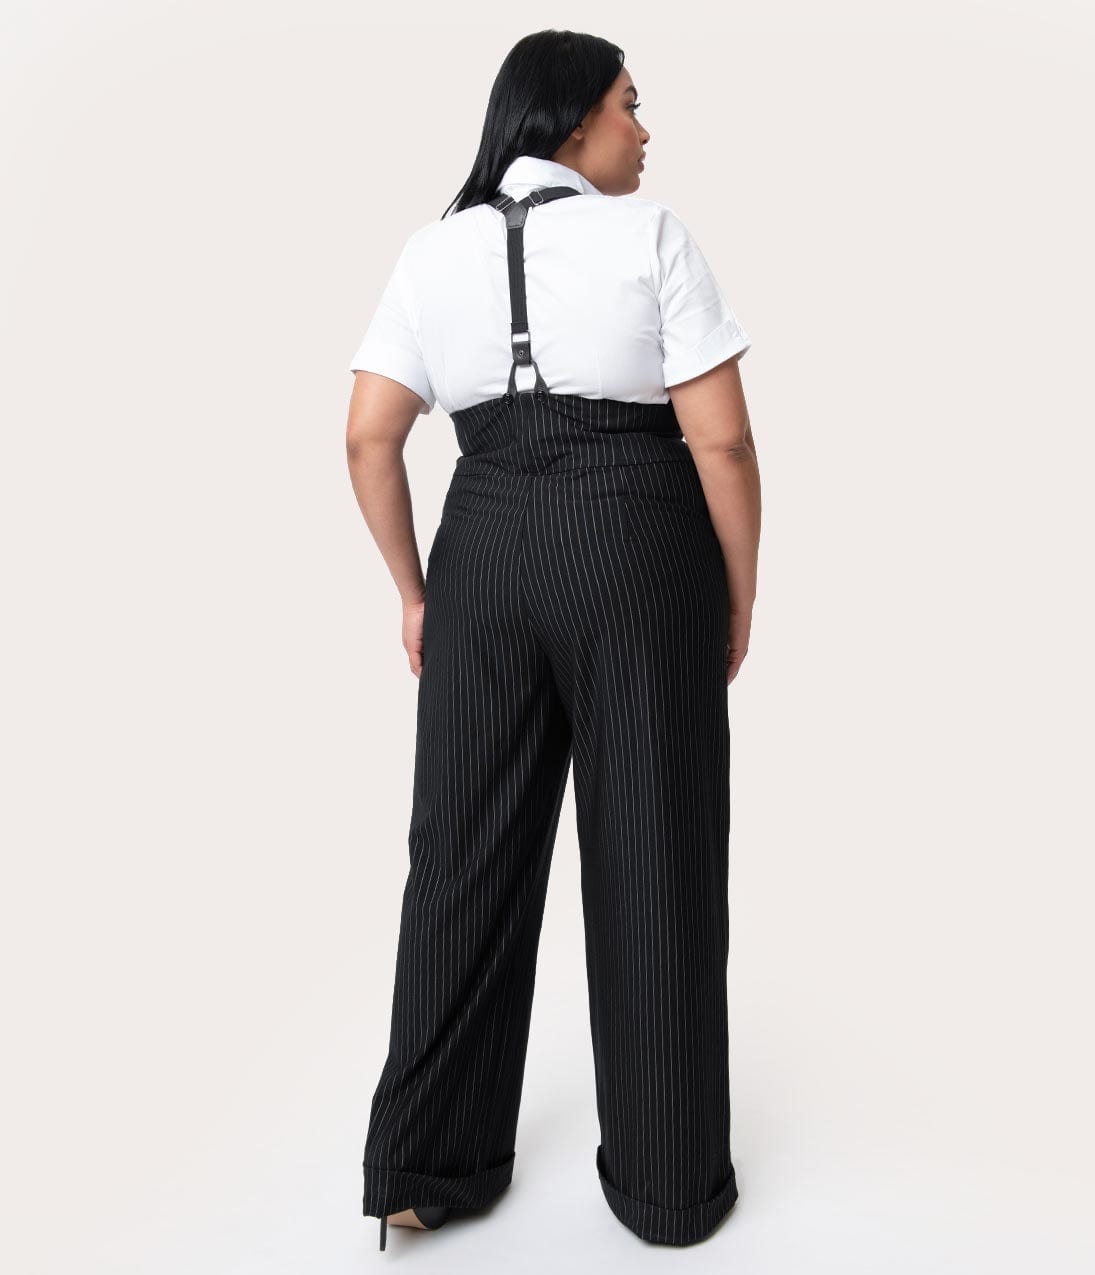 Unique Vintage 1940s Black Satin High Waist Ginger Pants